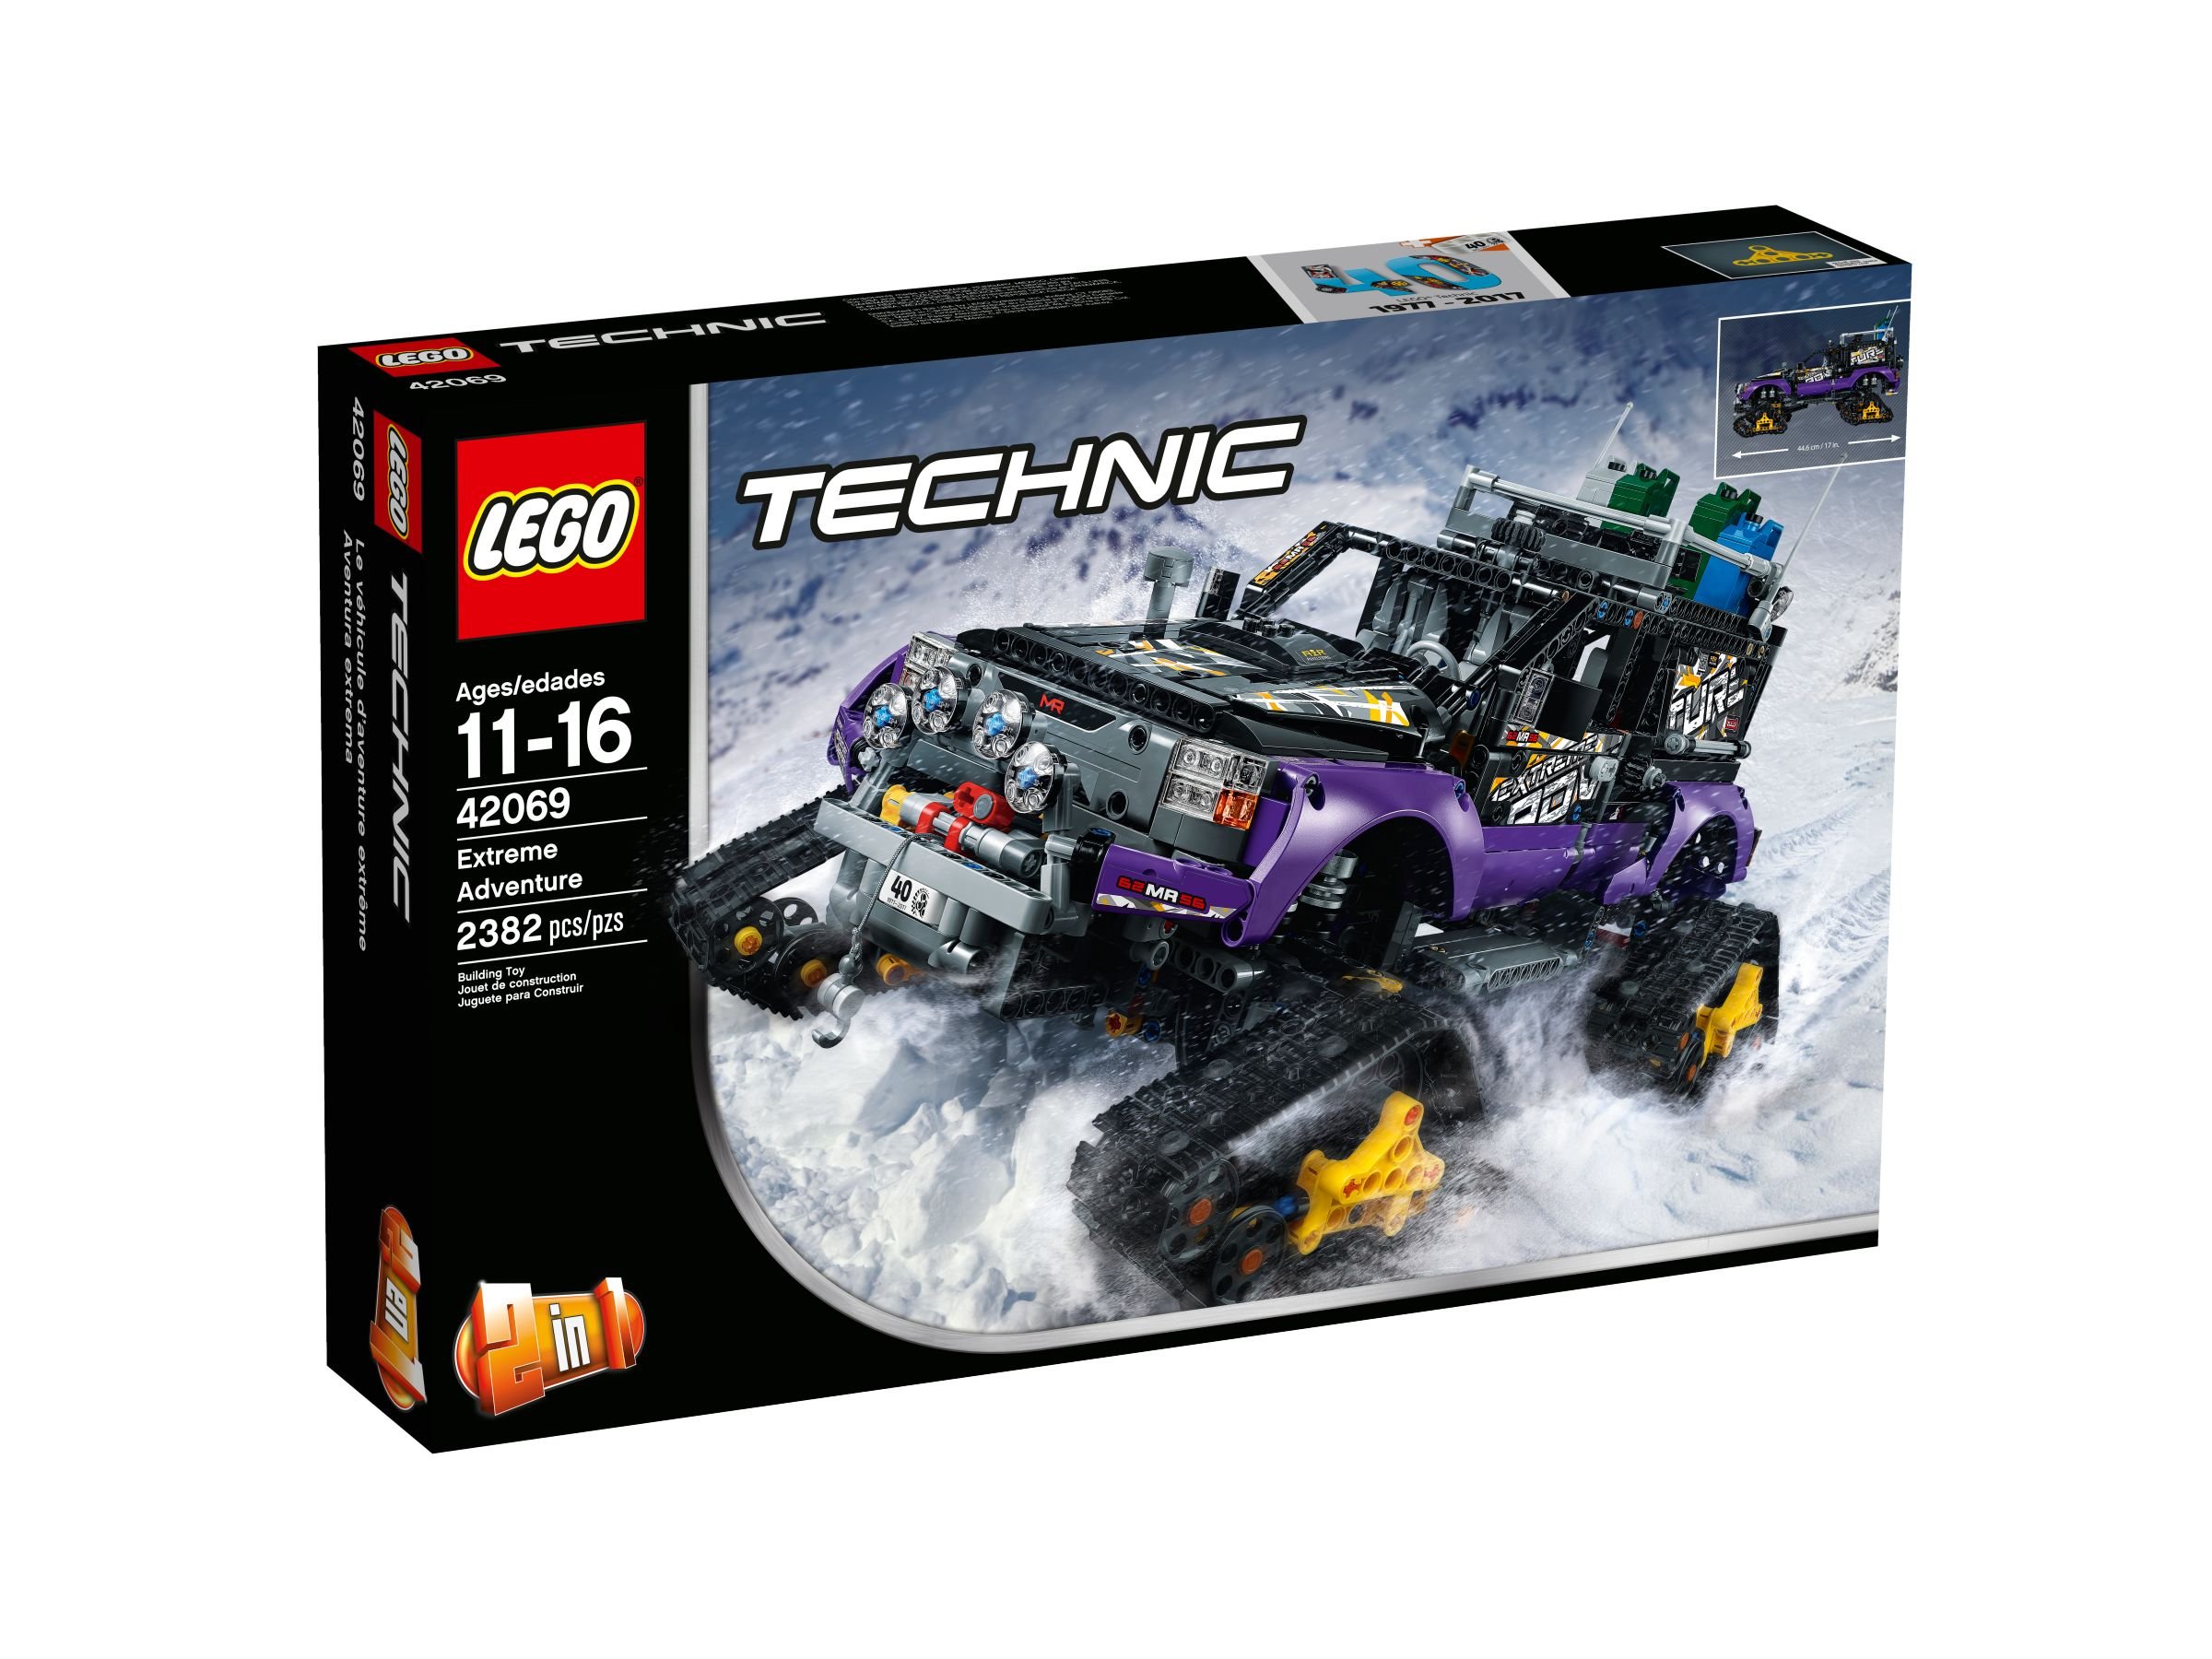 LEGO Technic 42069 Extremgeländefahrzeug LEGO_42069_alt1.jpg